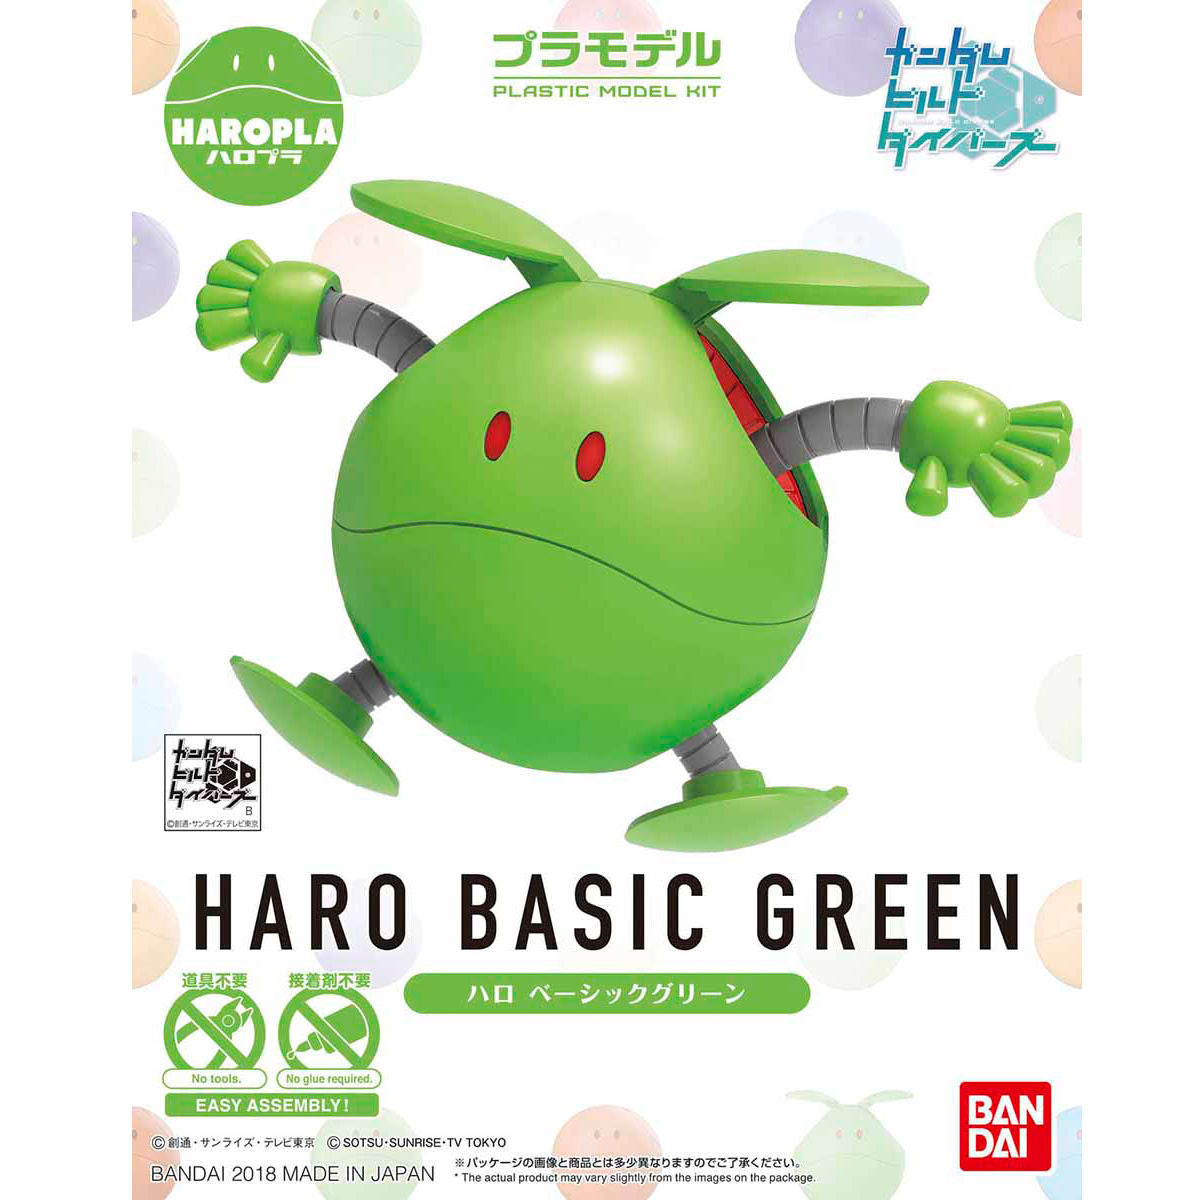 HAROPLA Haro Basic Green